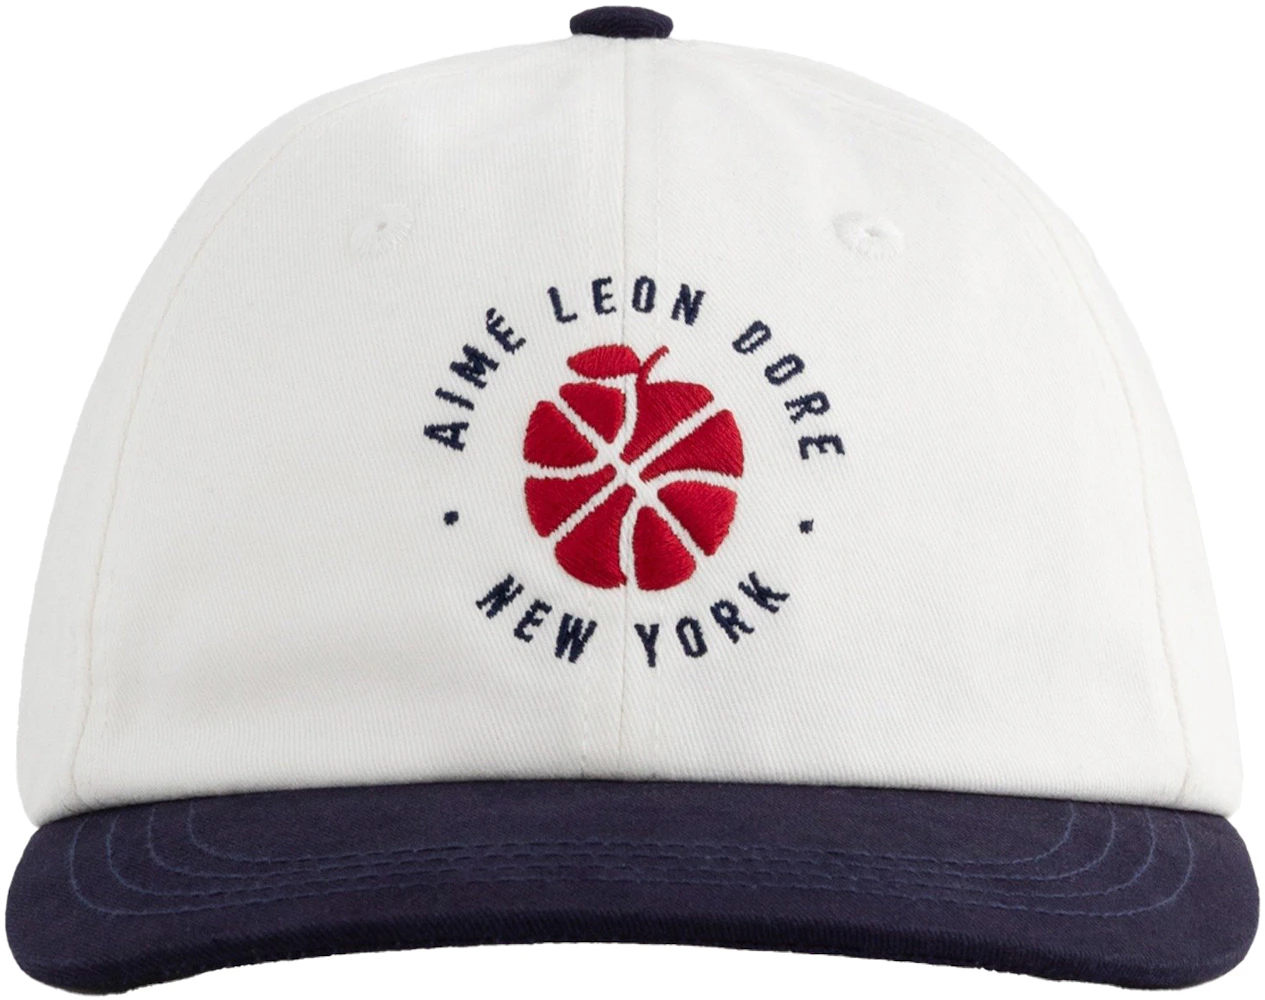 Aime Leon Dore ALD / New Balance Logo Hat White HAT cap Garden